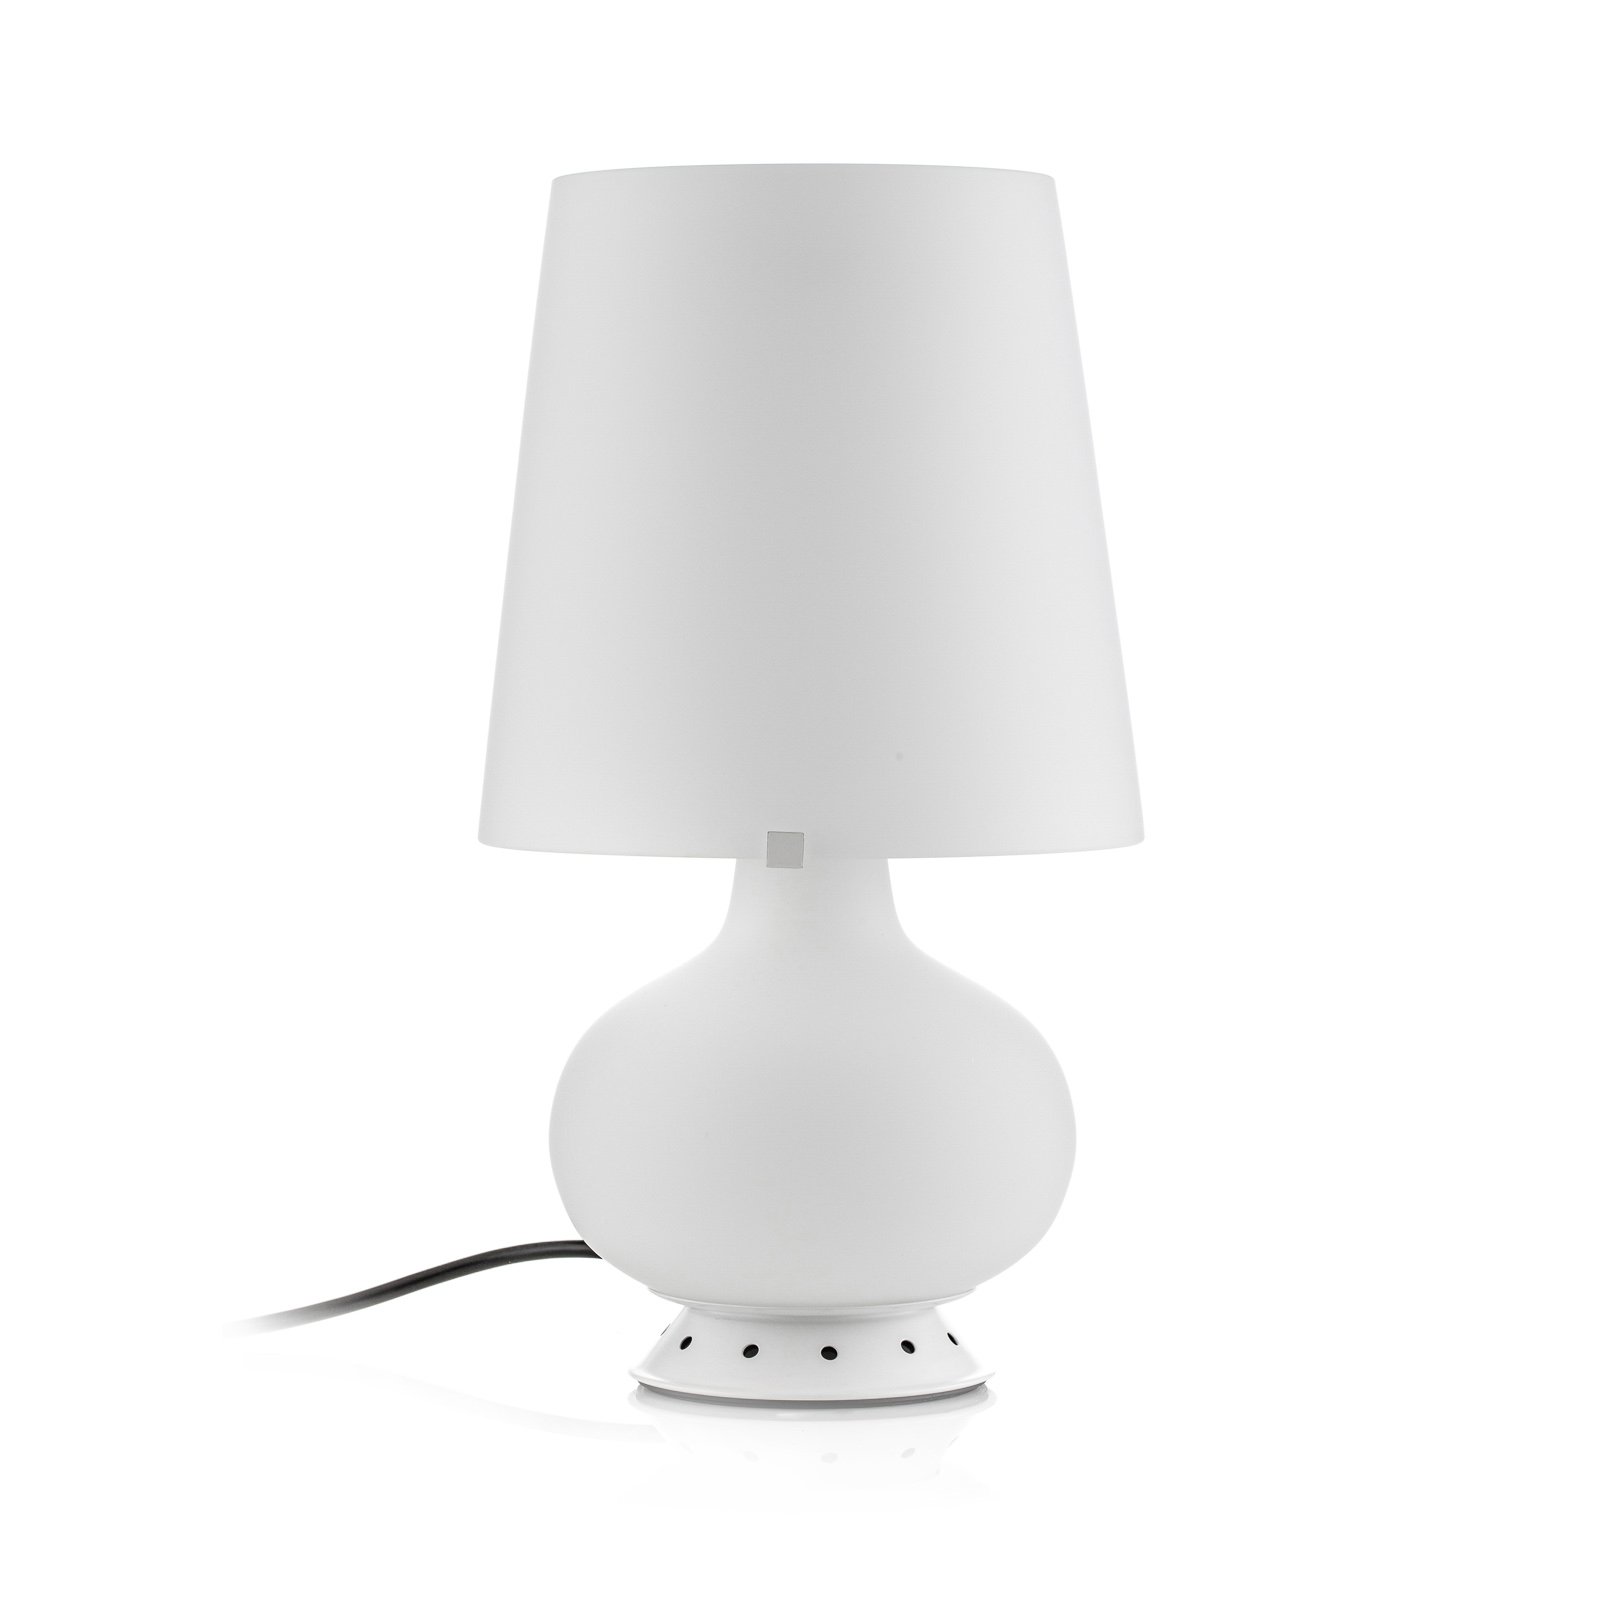 FONTANA design-bordlampe, 34 cm